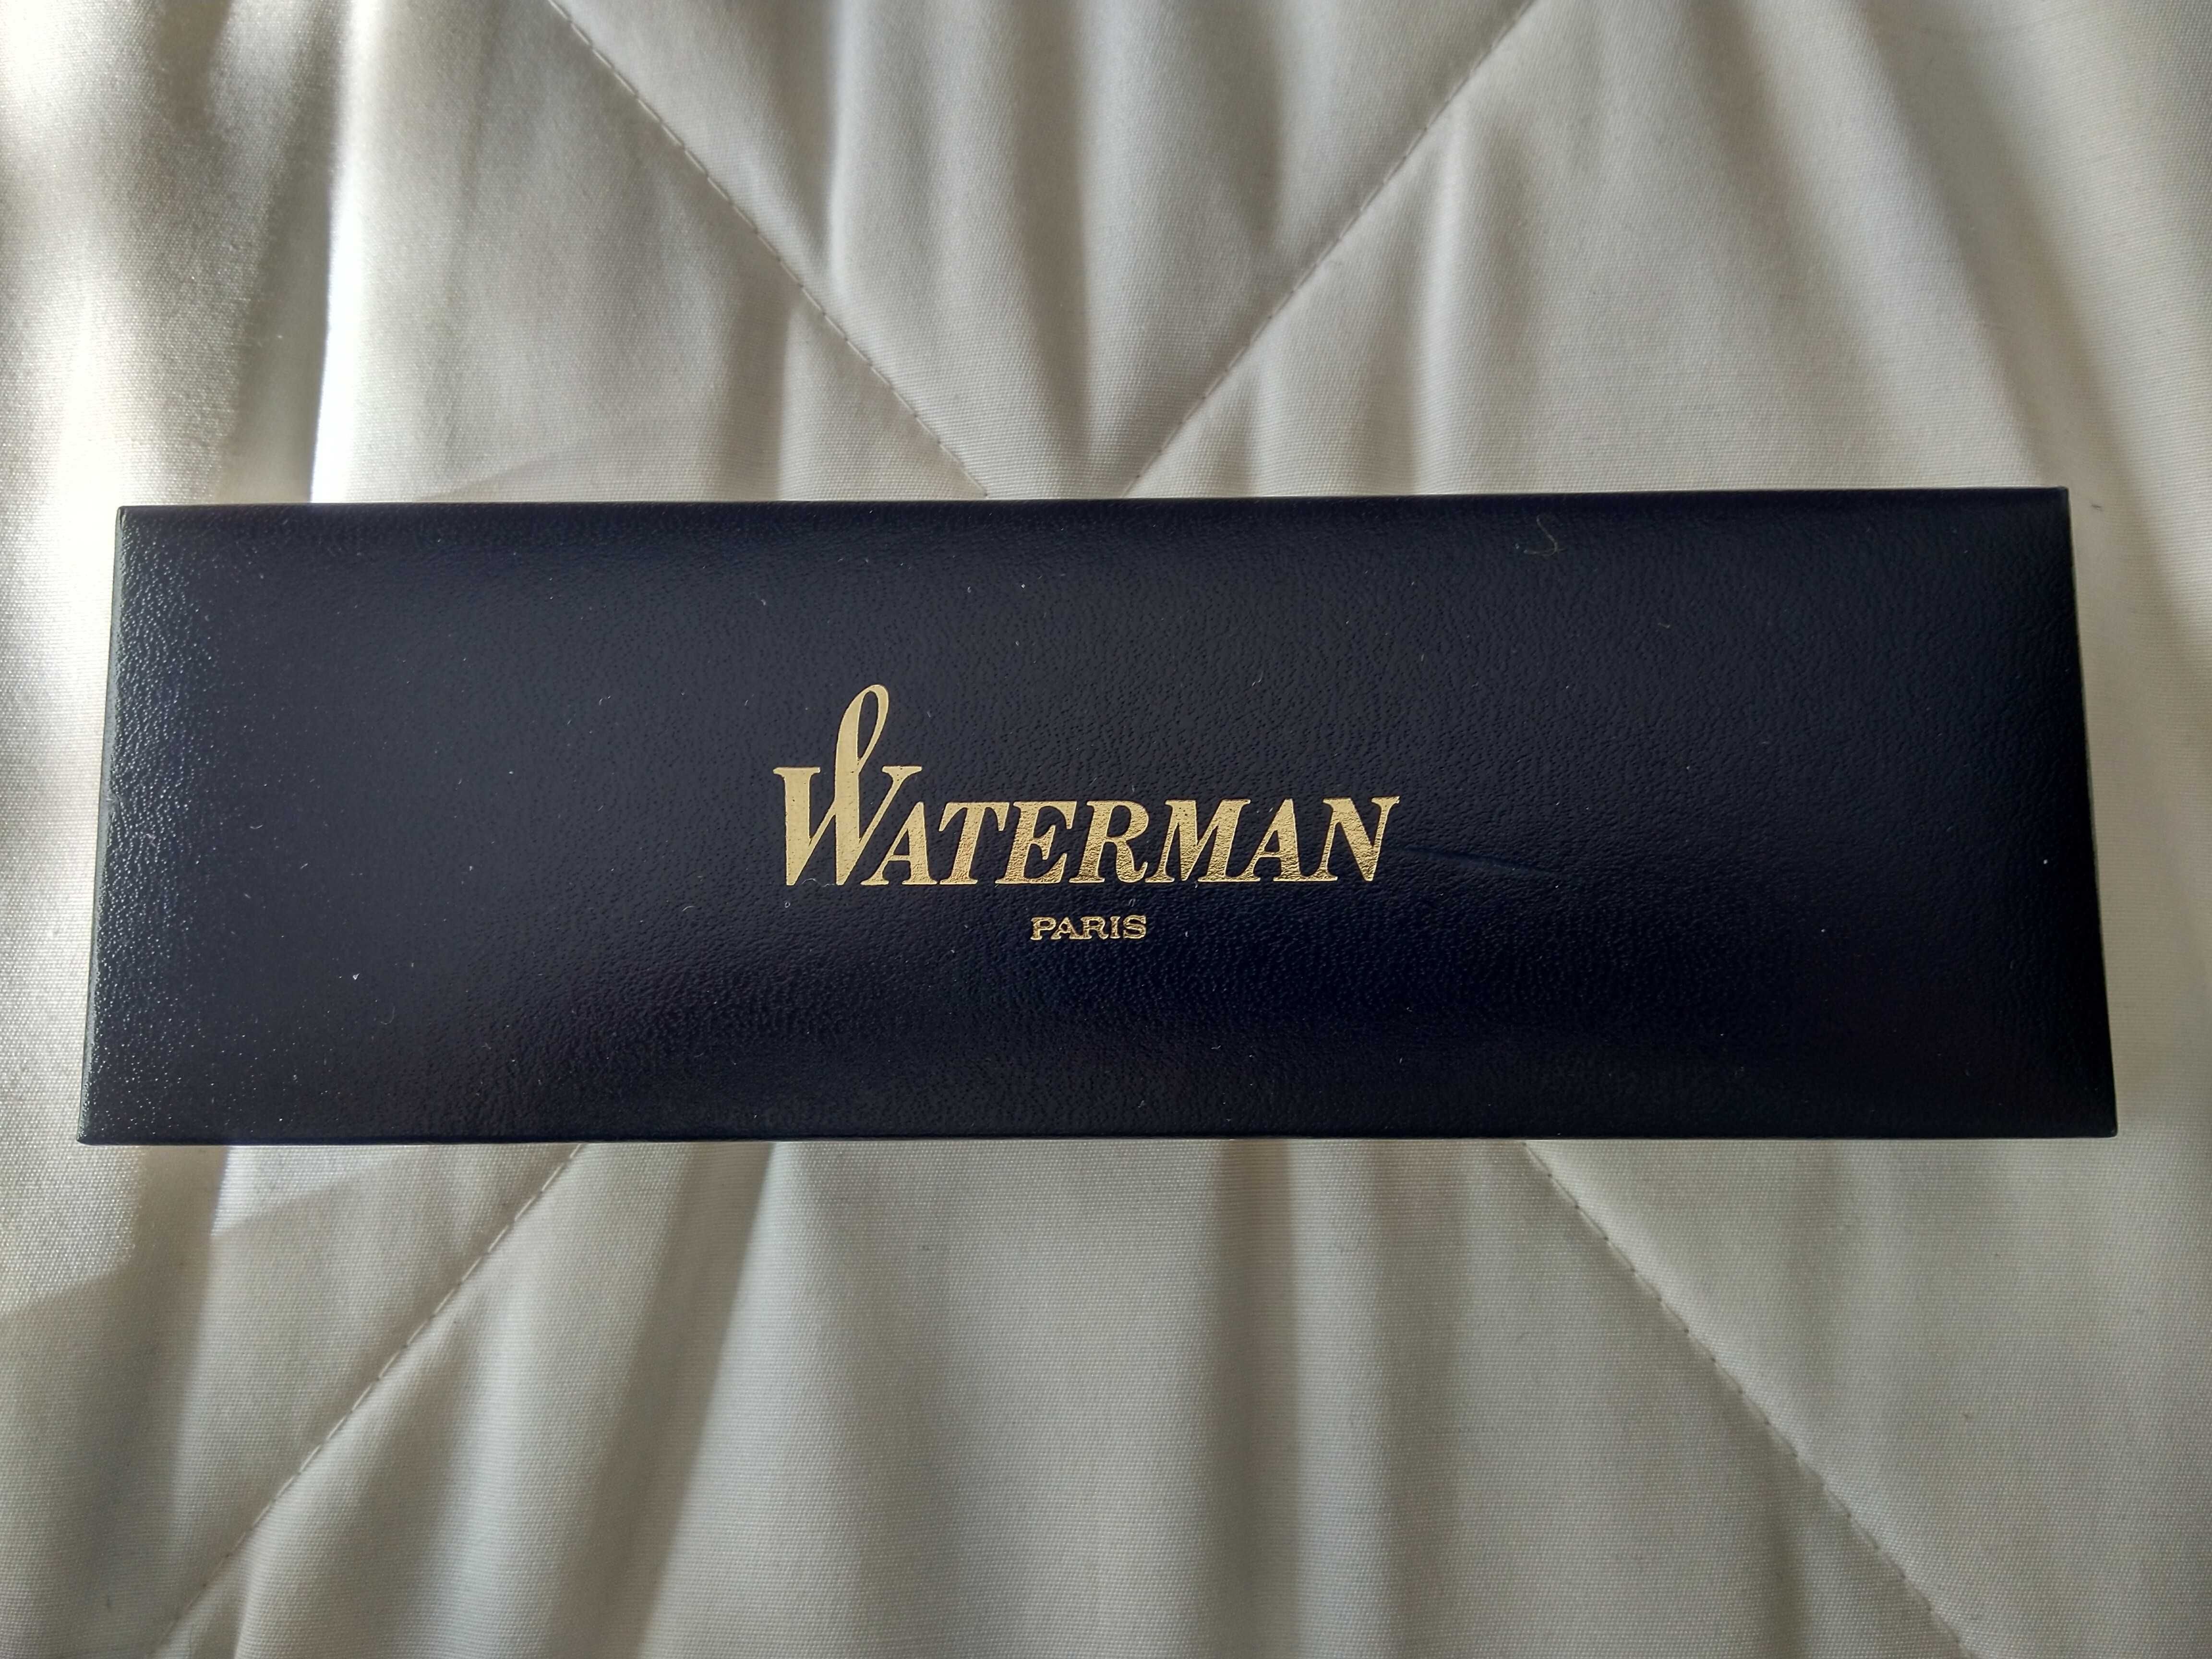 Caneta de tinta permanente Waterman Paris